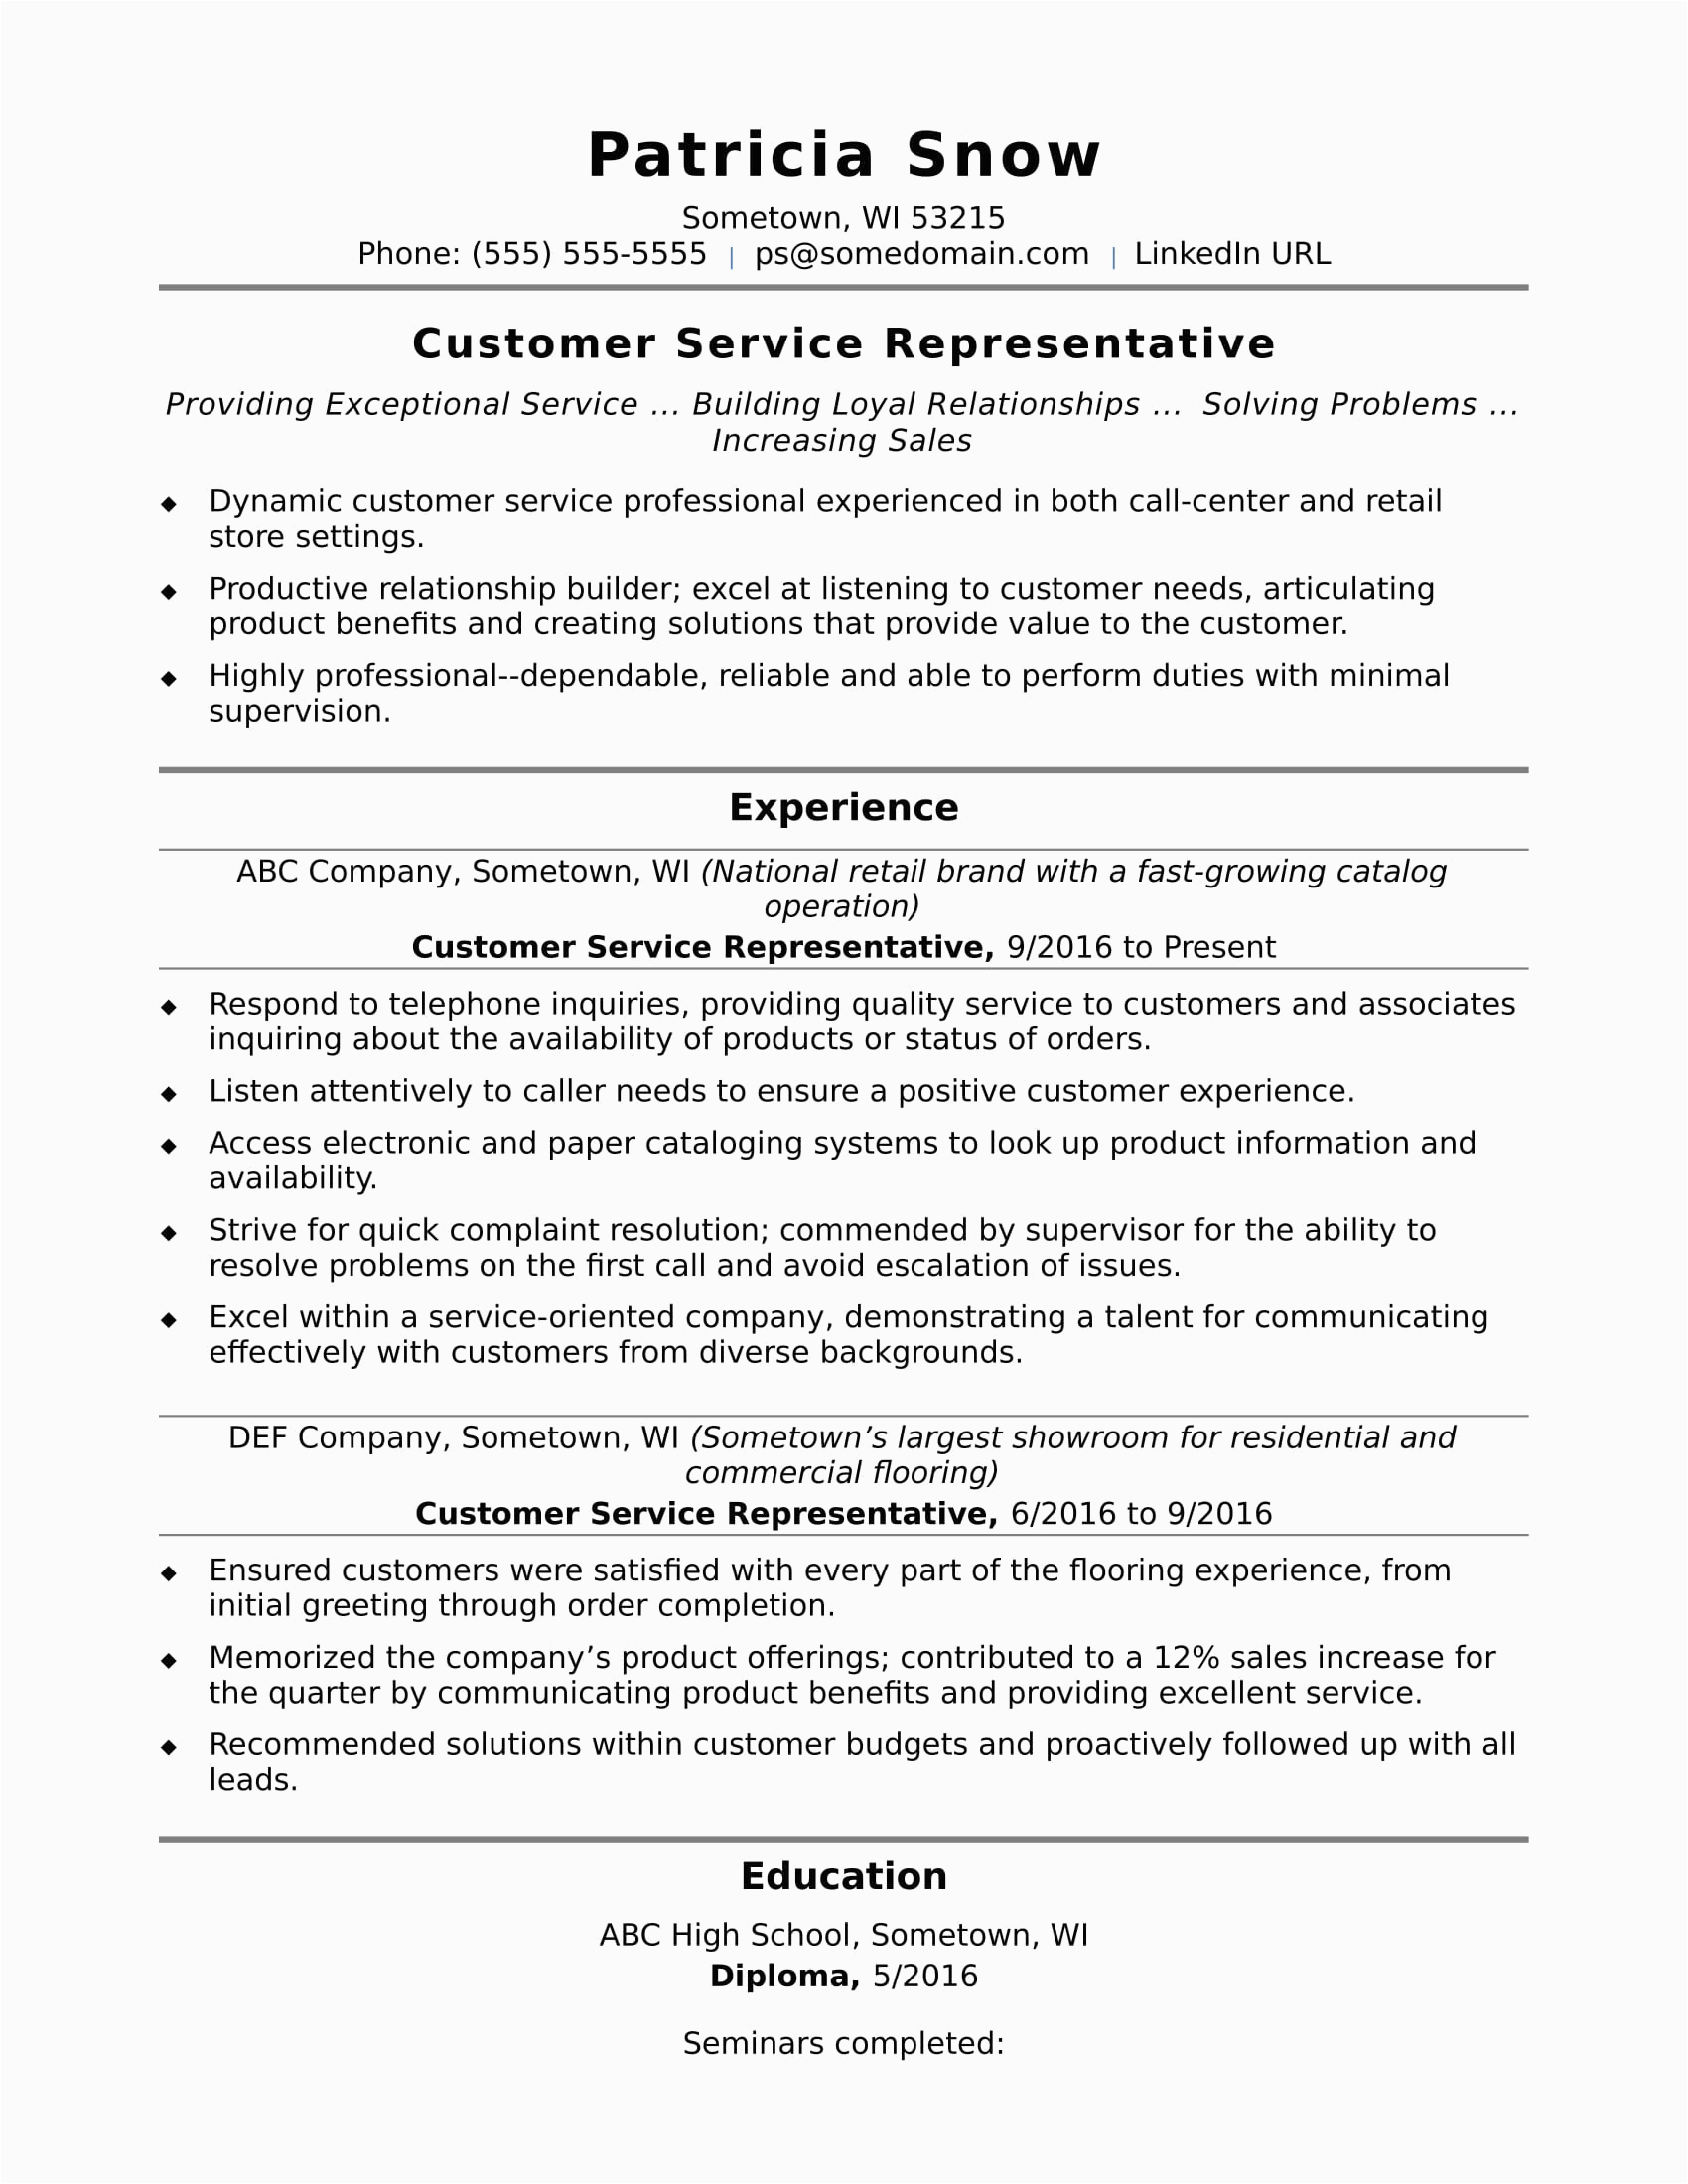 Sample for Resume for Customer Service Entry Level Customer Service Resume Sample